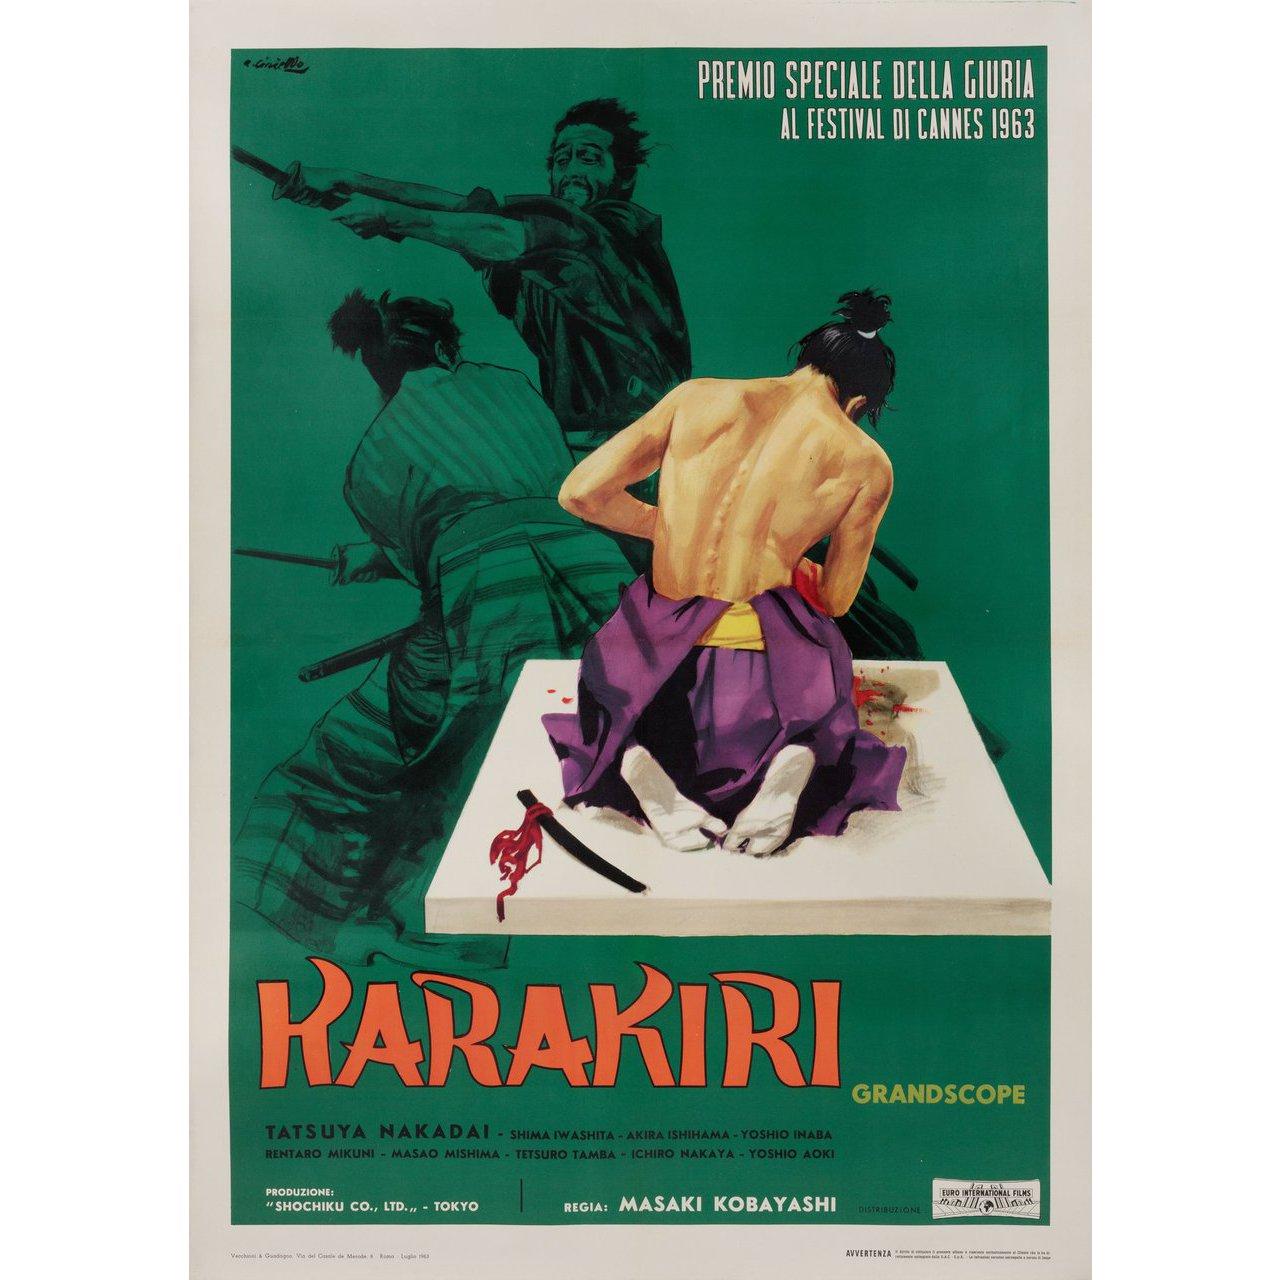 Original 1963 Italian due fogli poster by Averardo Ciriello for the film Harakiri (Seppuku) directed by Masaki Kobayashi with Tatsuya Nakadai / Akira Ishihama / Shima Iwashita / Tetsuro Tanba. Fine condition, linen-backed. This poster has been